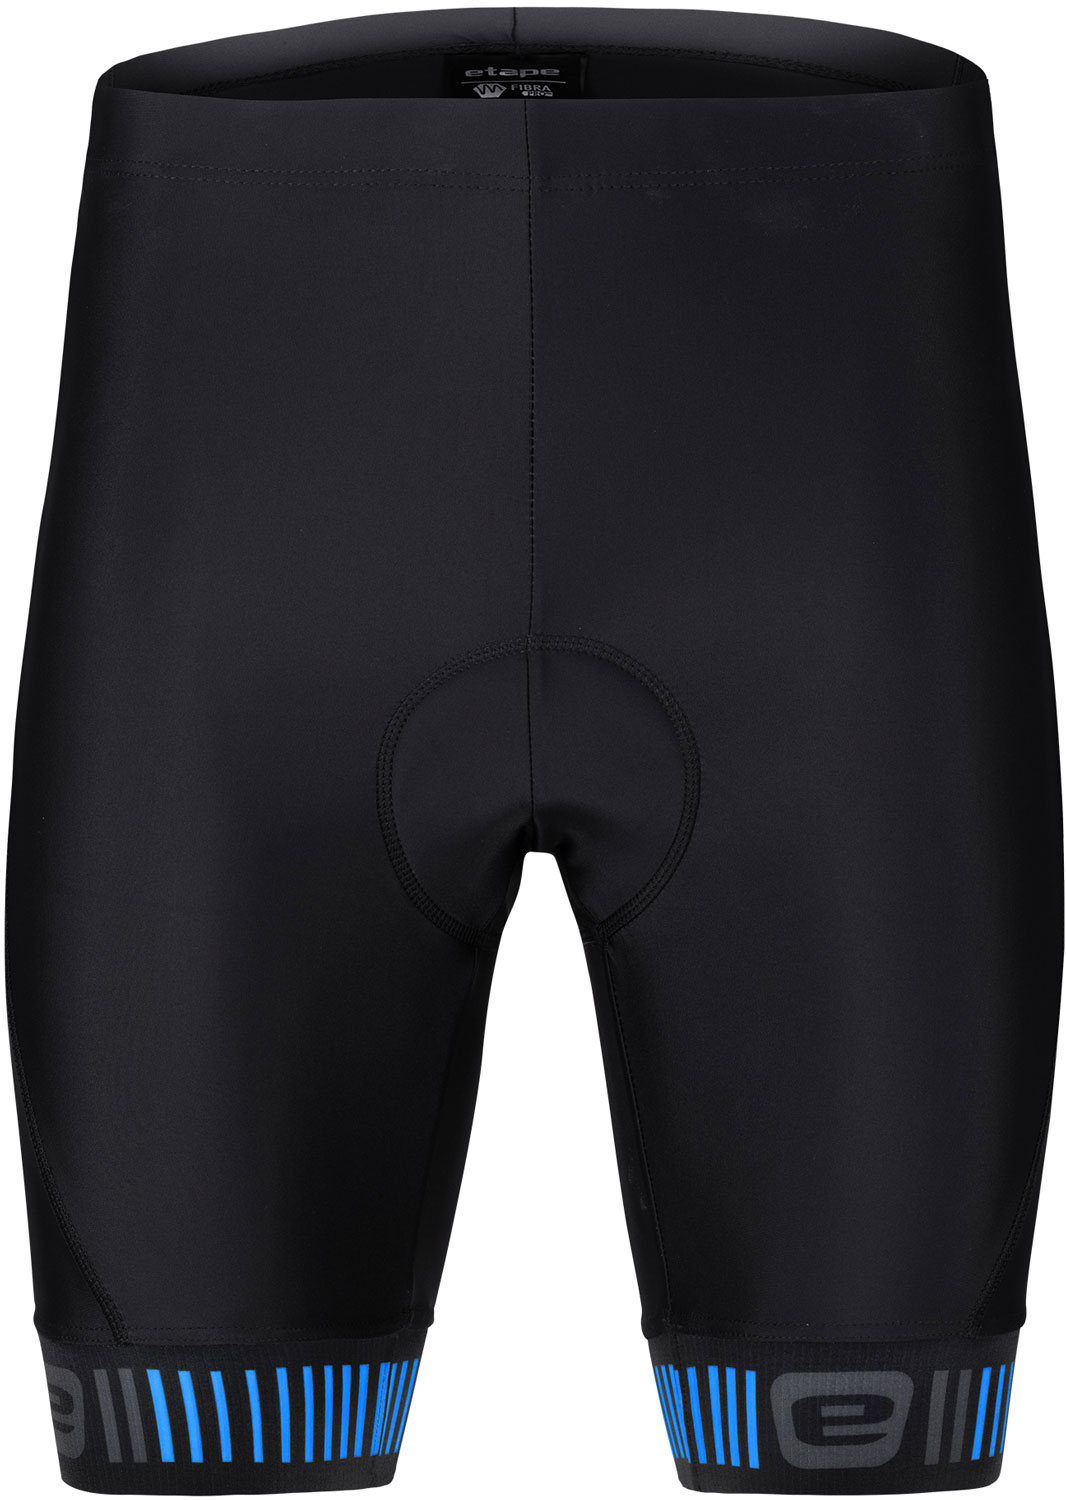 Men's cycling pants